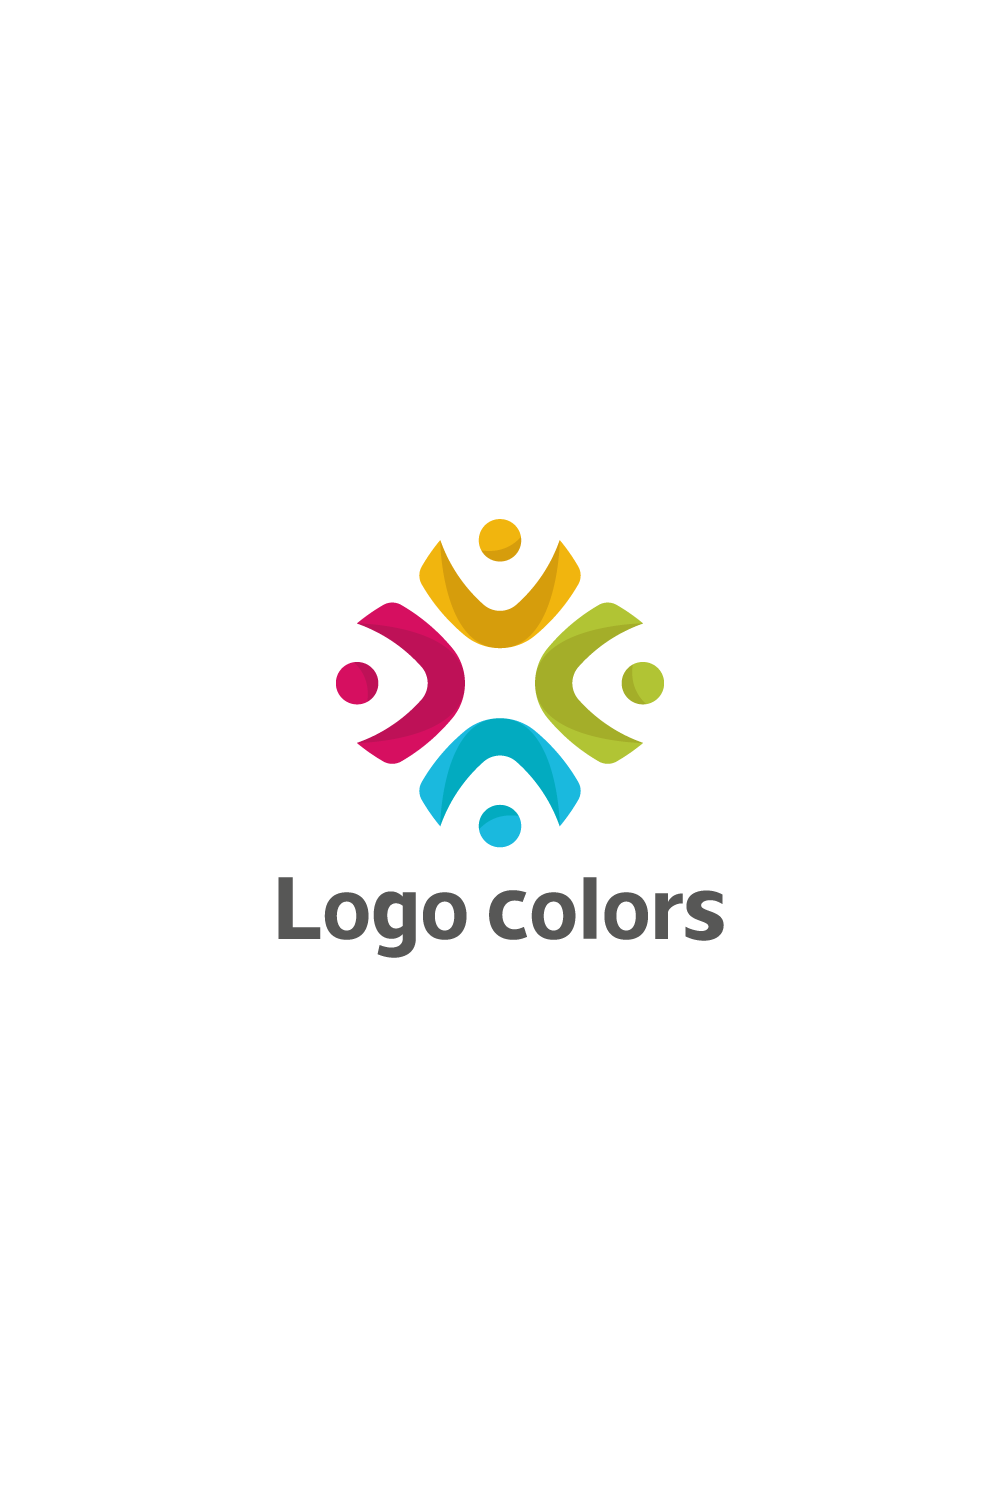 Logo colors pinterest preview image.